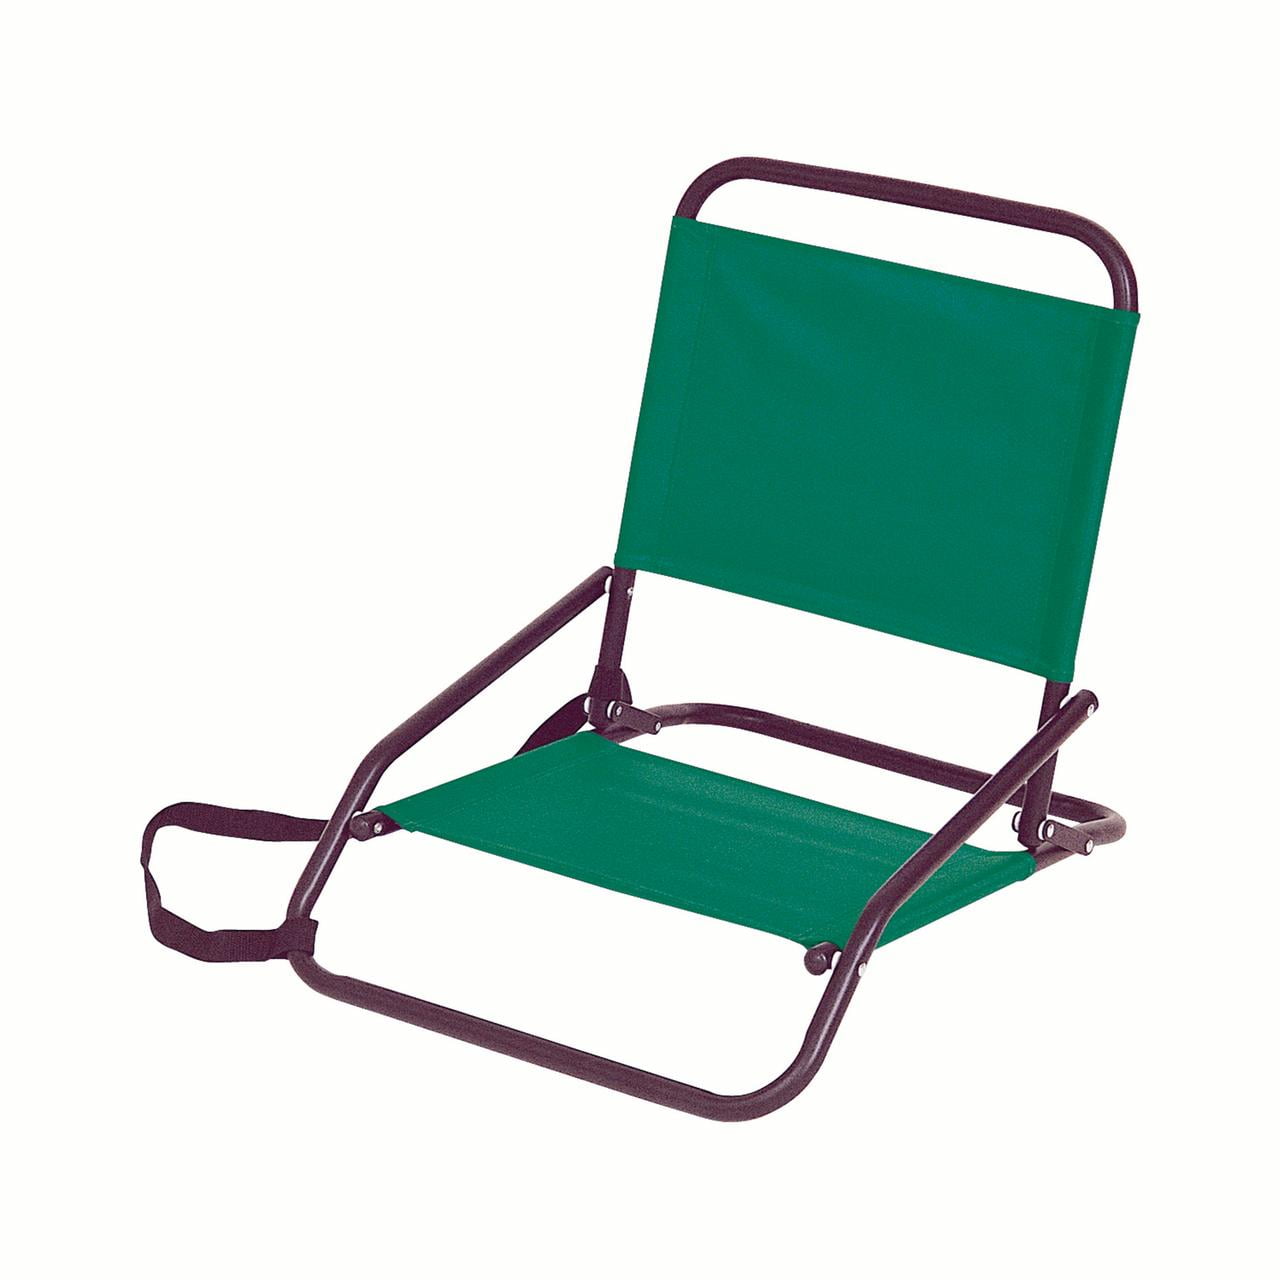 Stansport Sandpiper Sand Beach Chair - Blue Folding 1 